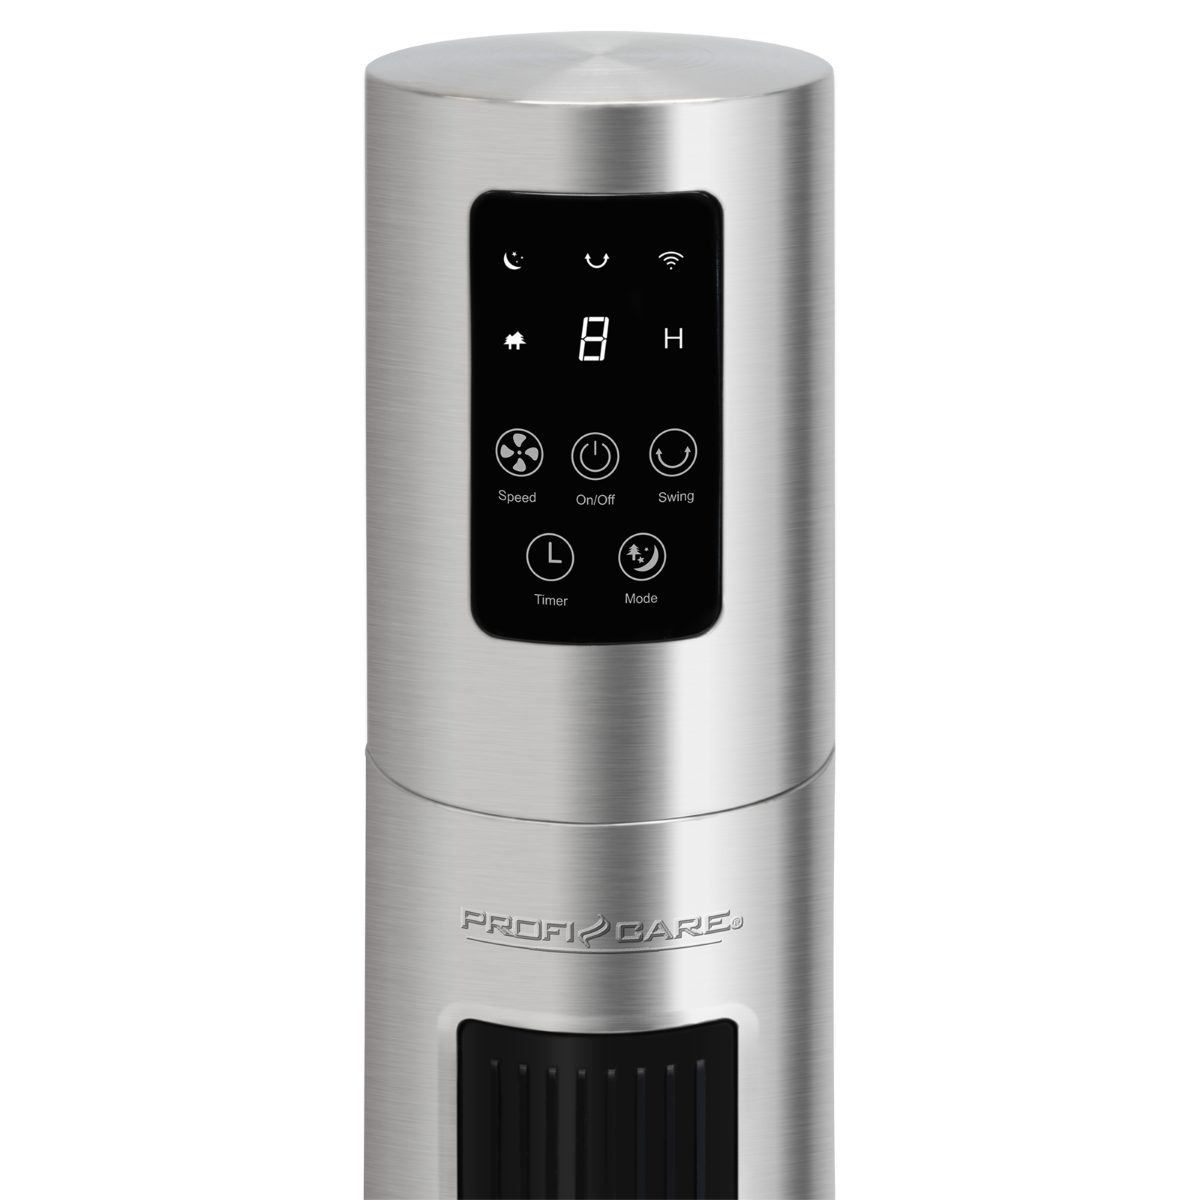 ProfiCare Turmventilator PC-TVL 3090, edelstahl Smart Voice Control (WLAN/WiFi)-Bedienung